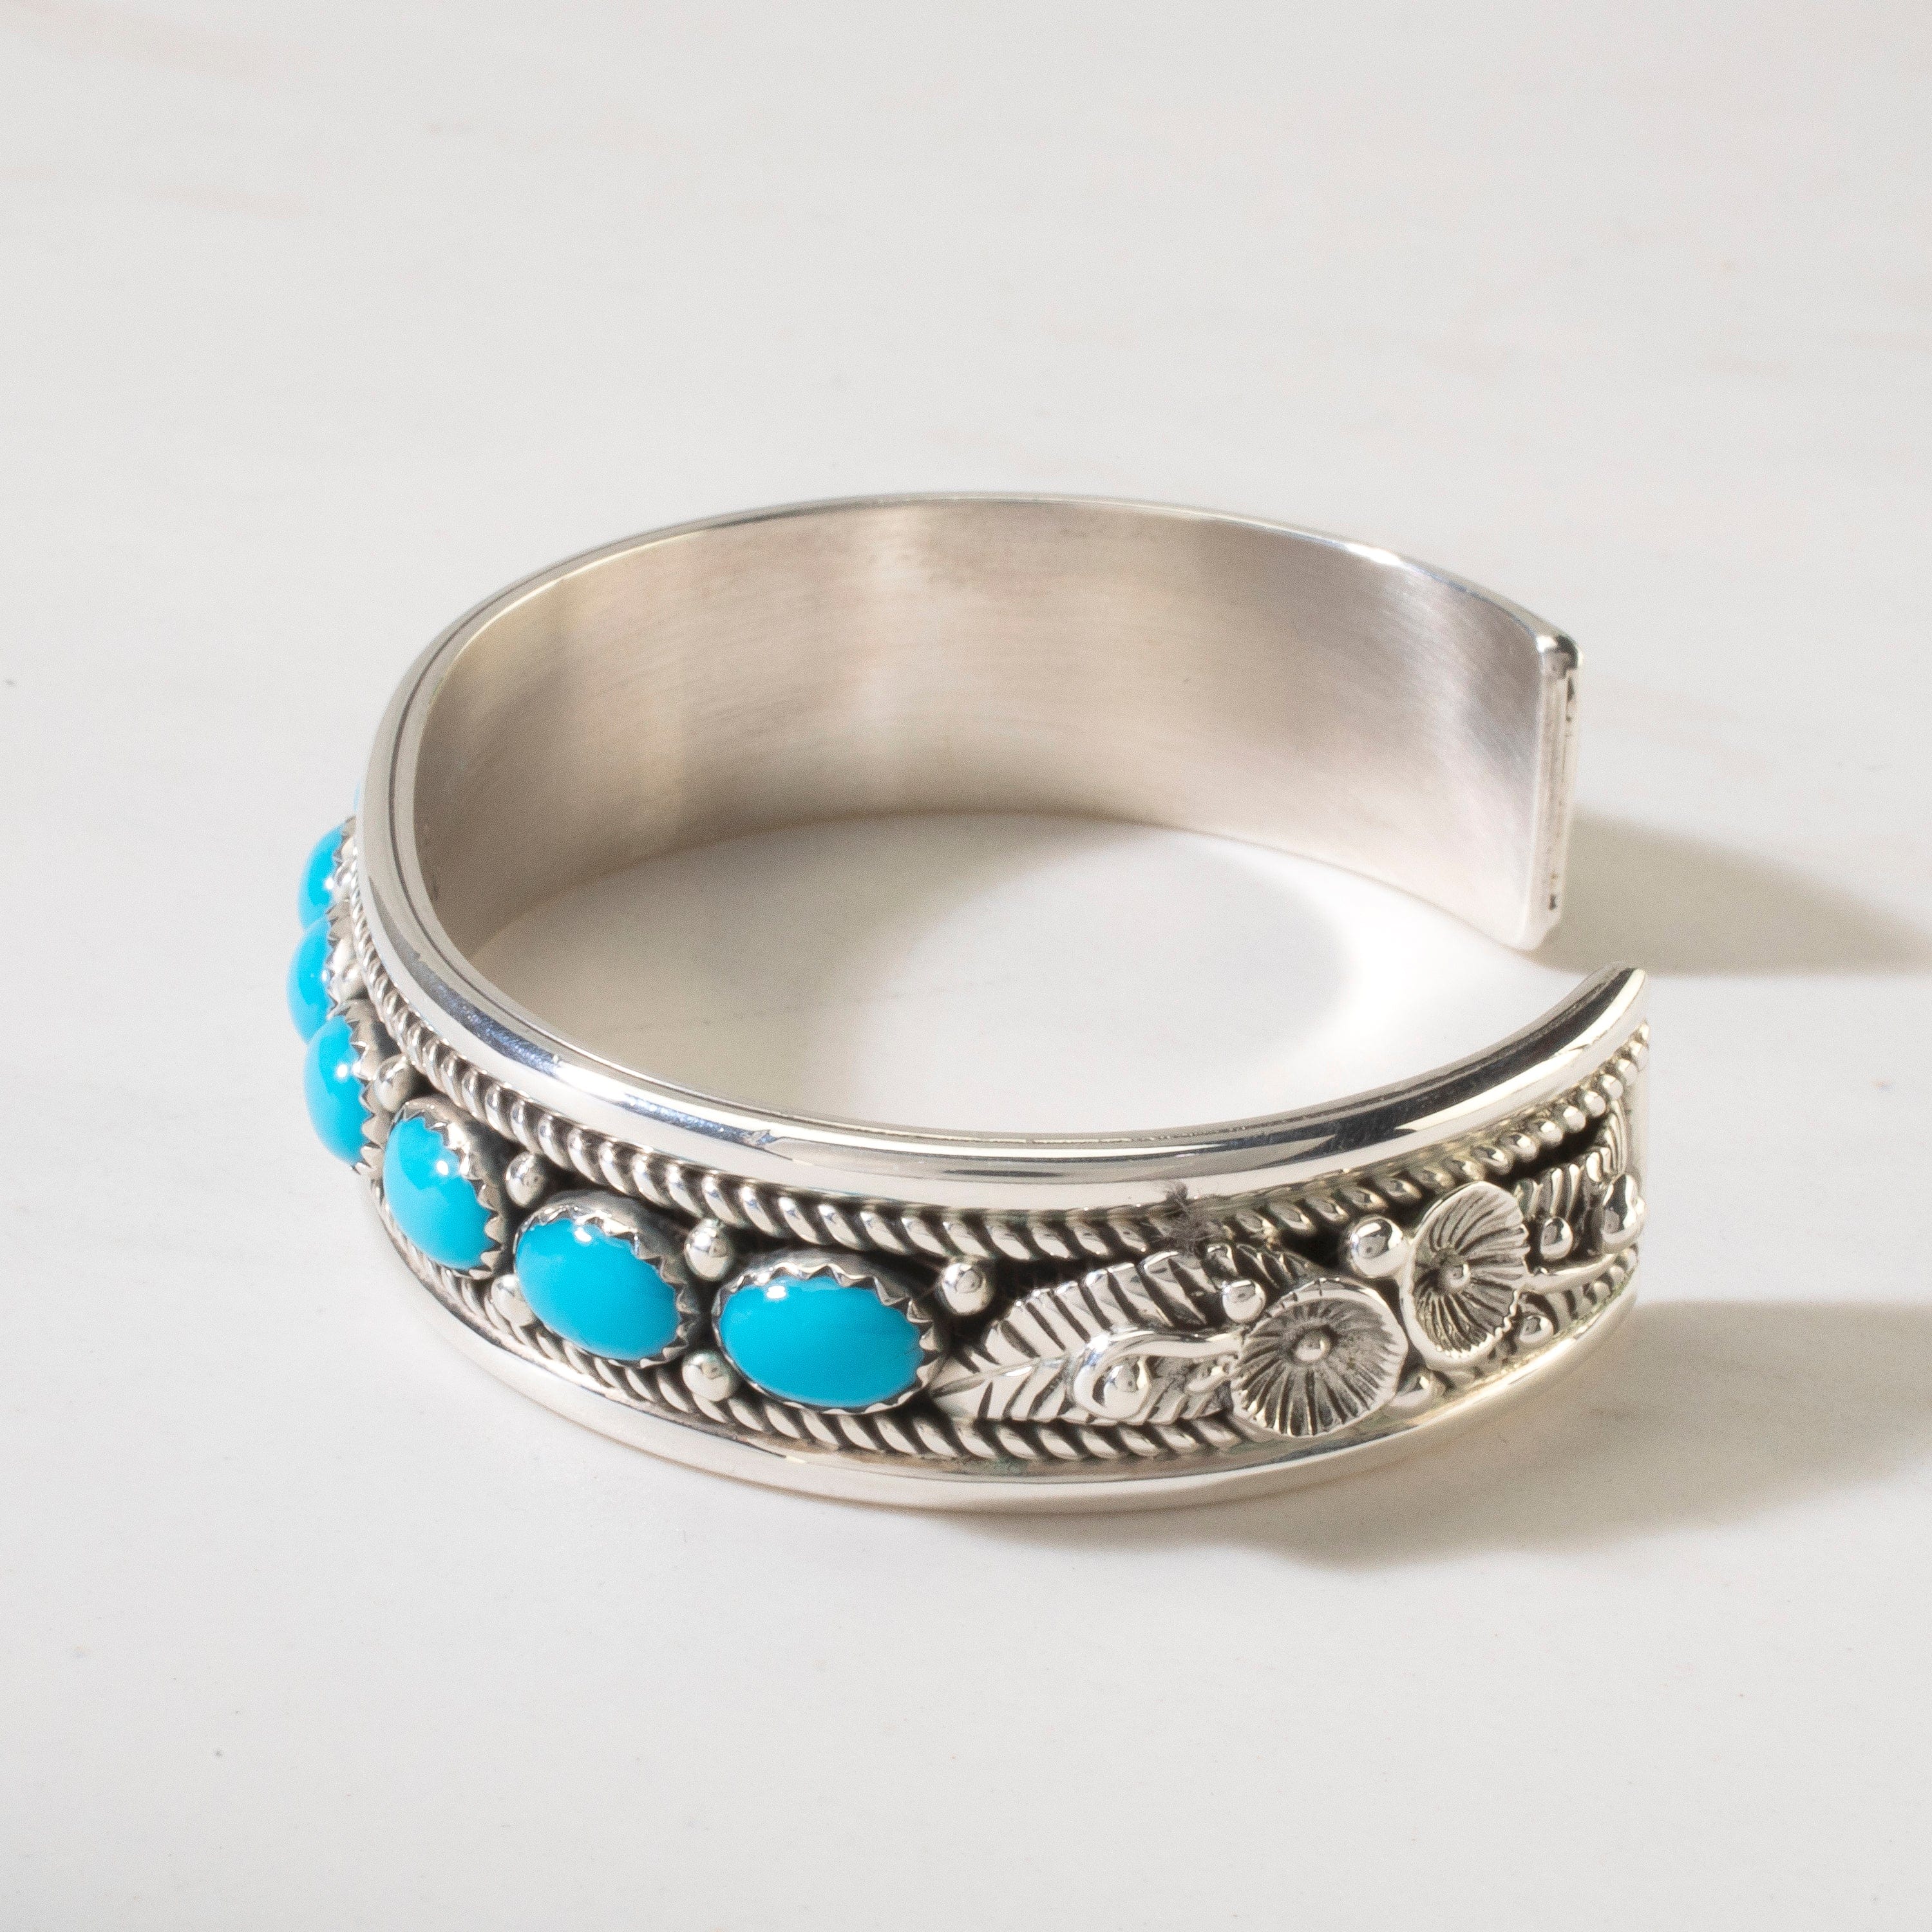 Beautiful Bracelets Made in the USA | Bridal diamond jewellery, Diamond  bracelet design, Gold jewelry stores